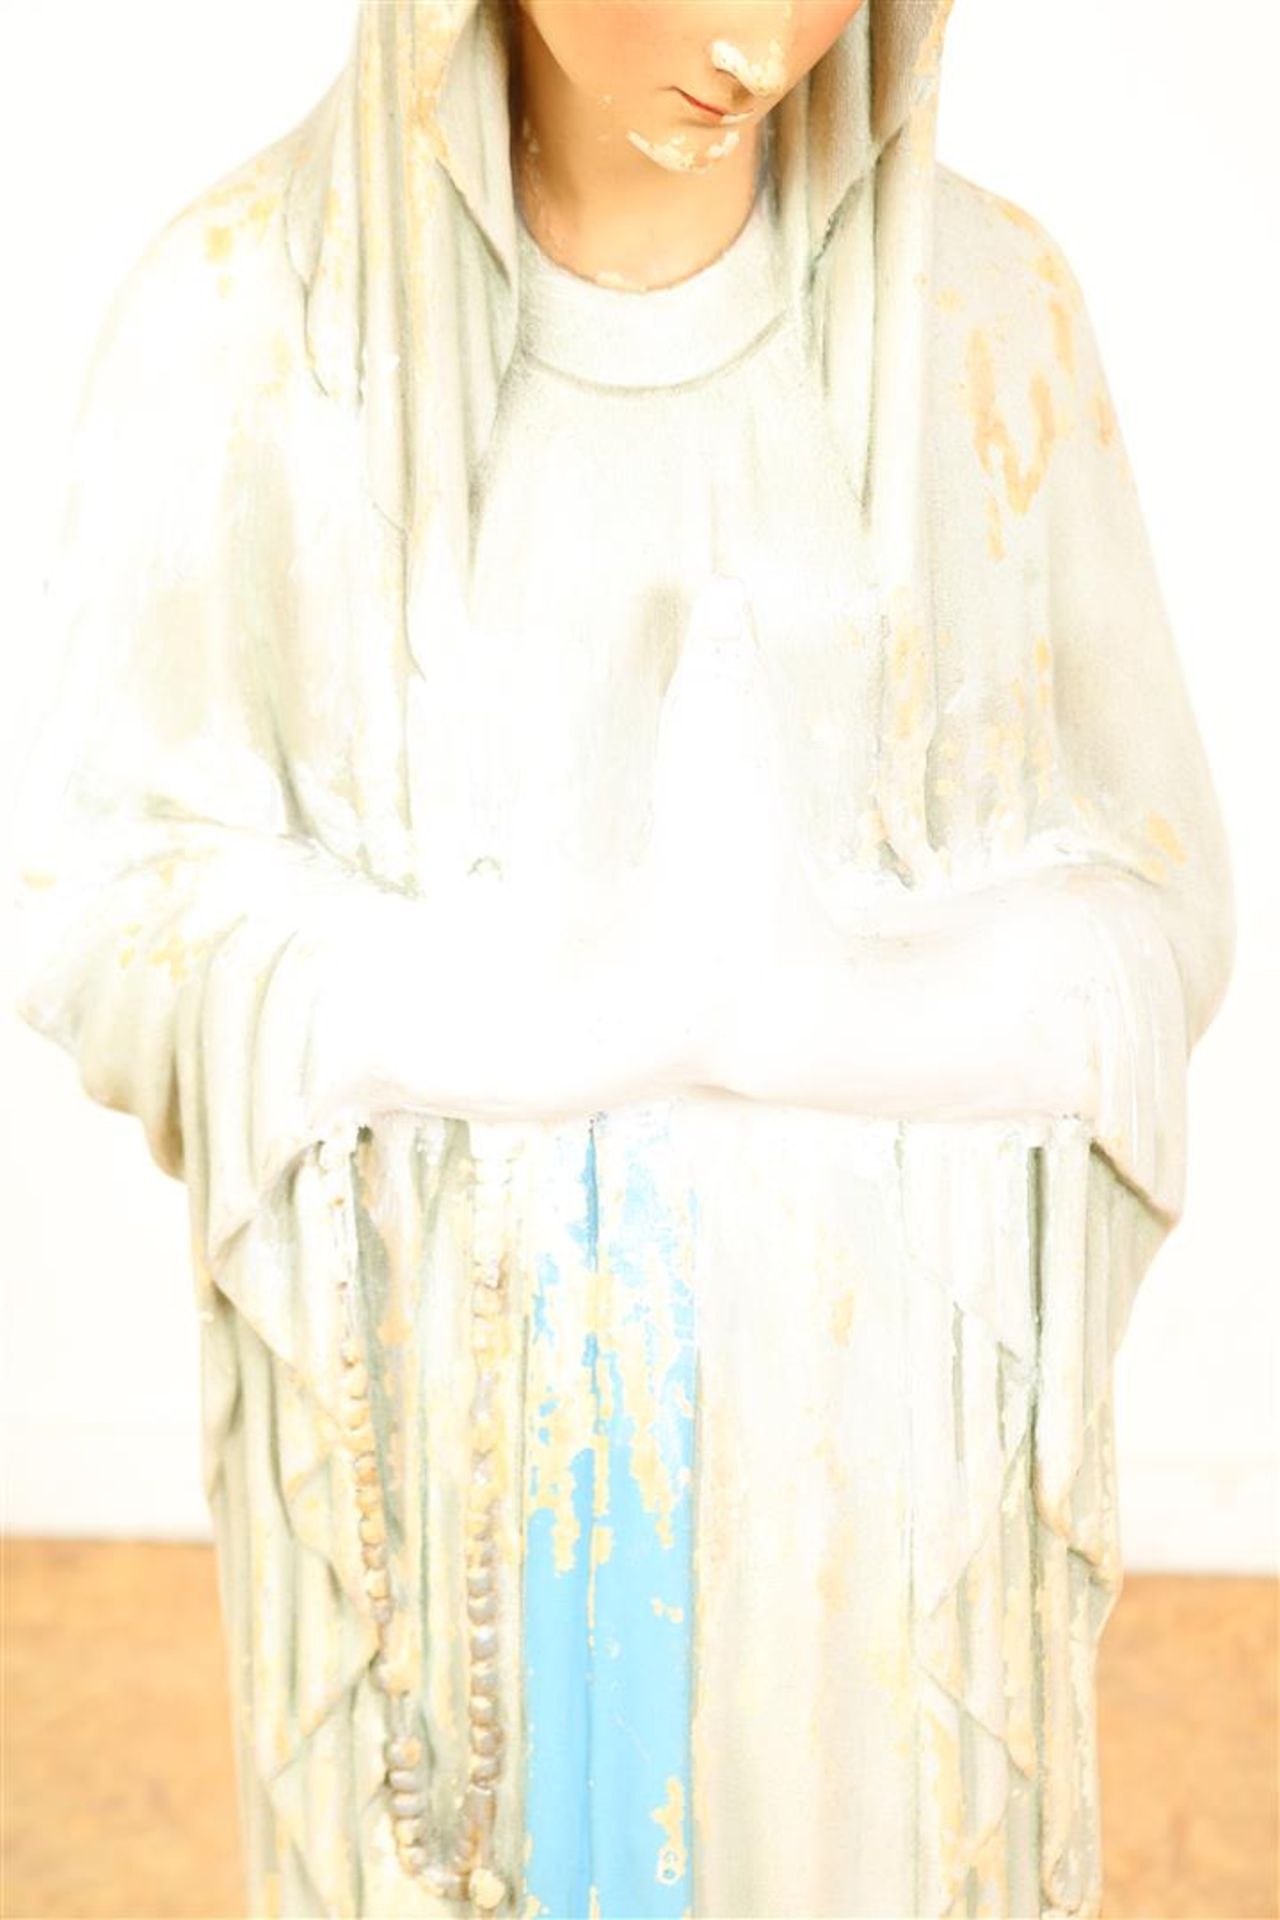 Plaster sculpture of Mary - Bild 3 aus 5